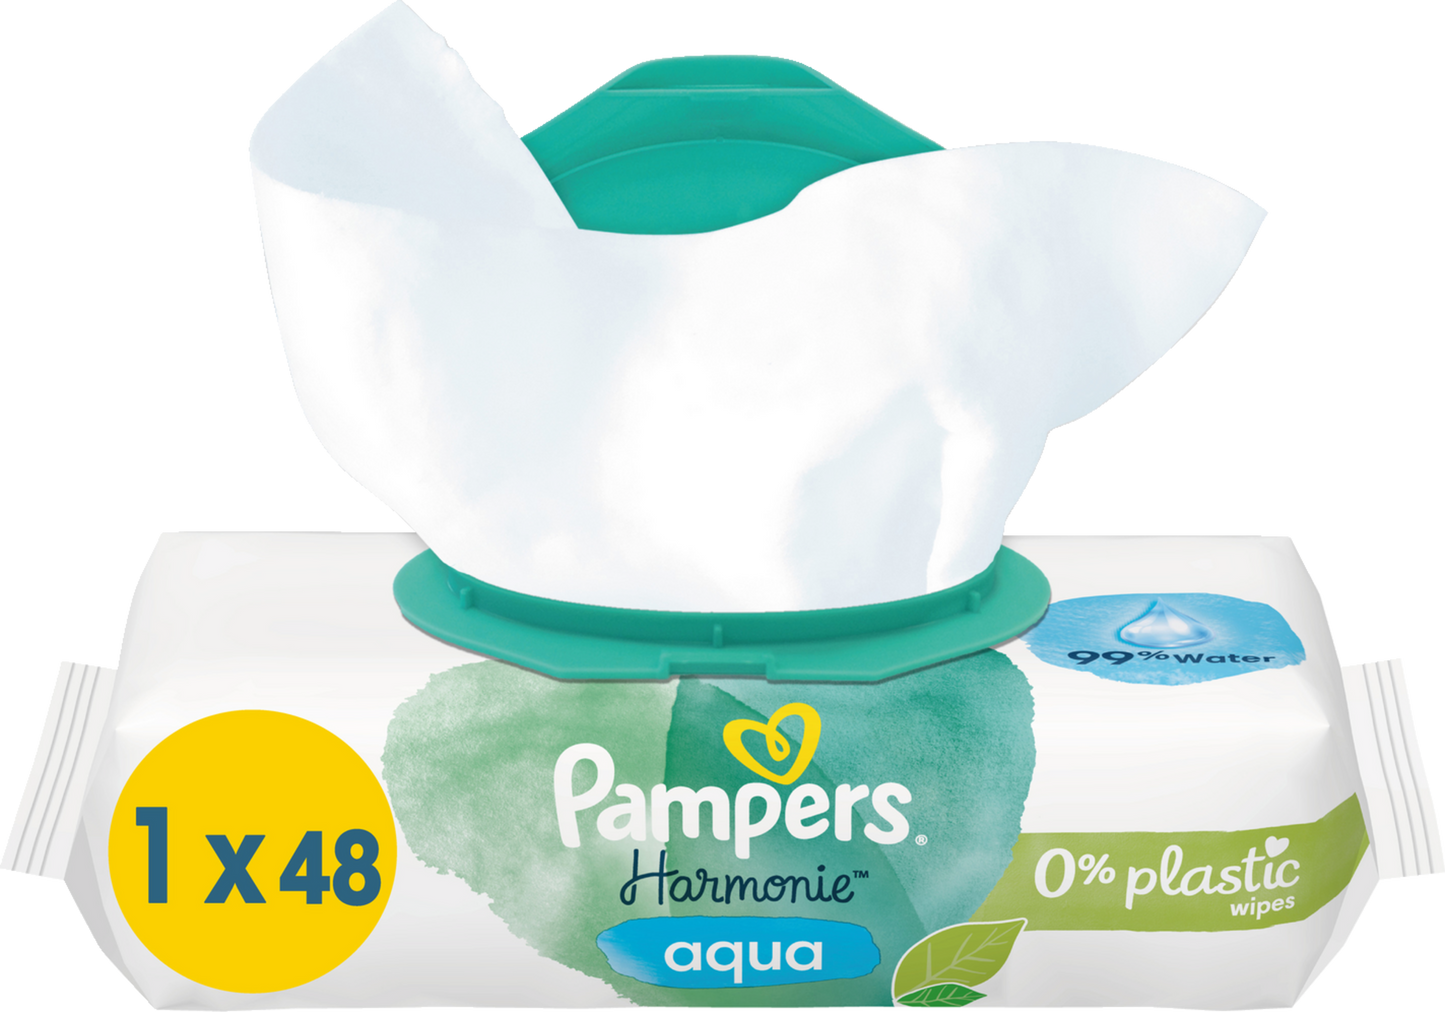 Pampers Harmonie Aqua Lingettes (48 pces)